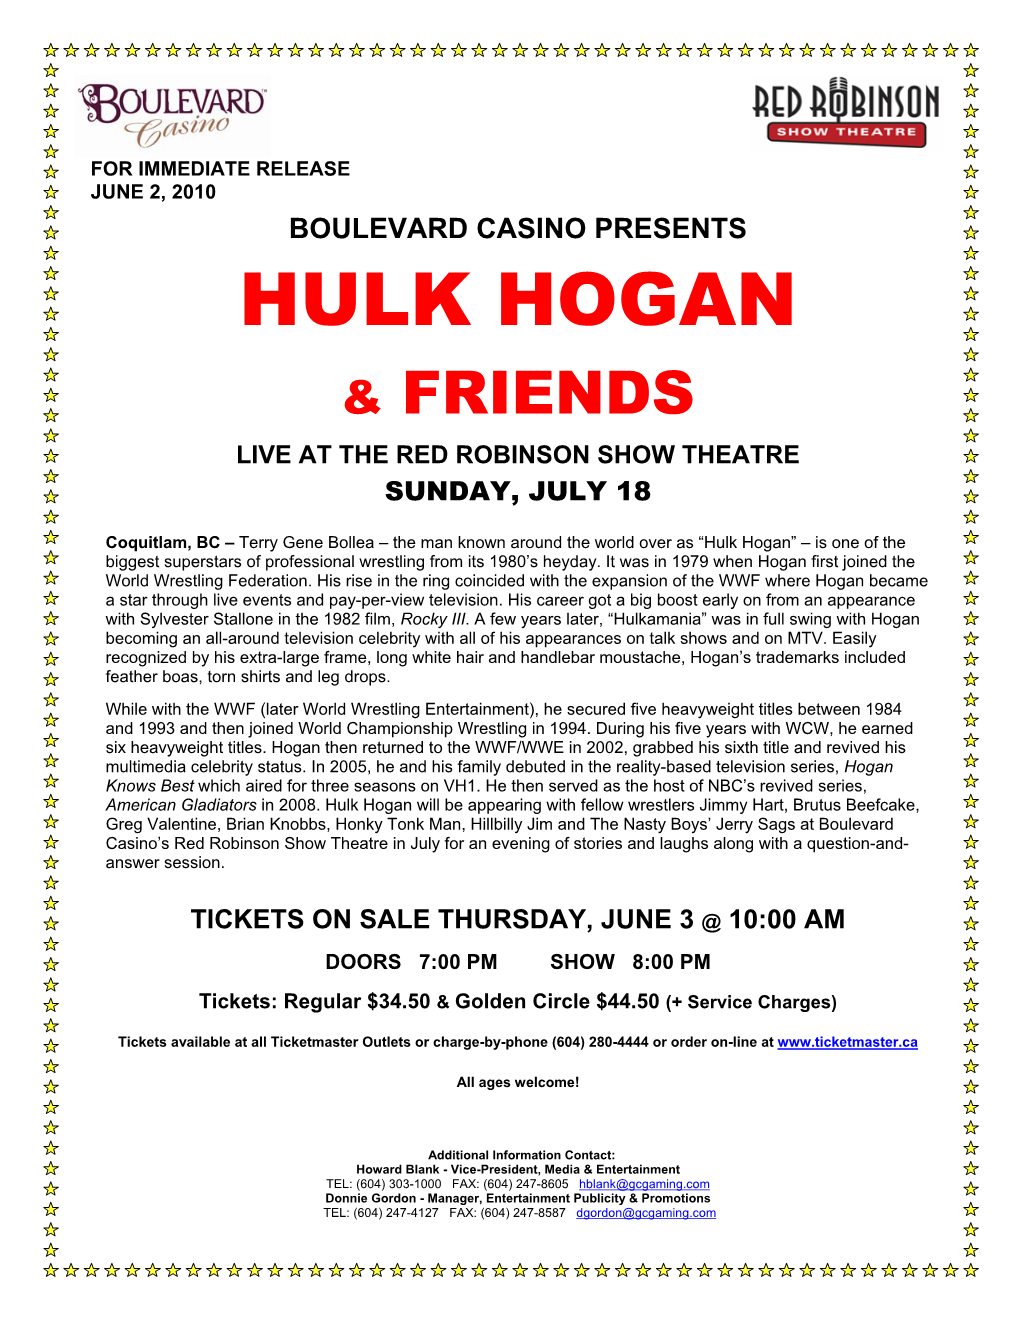 Hulk Hogan & Friends